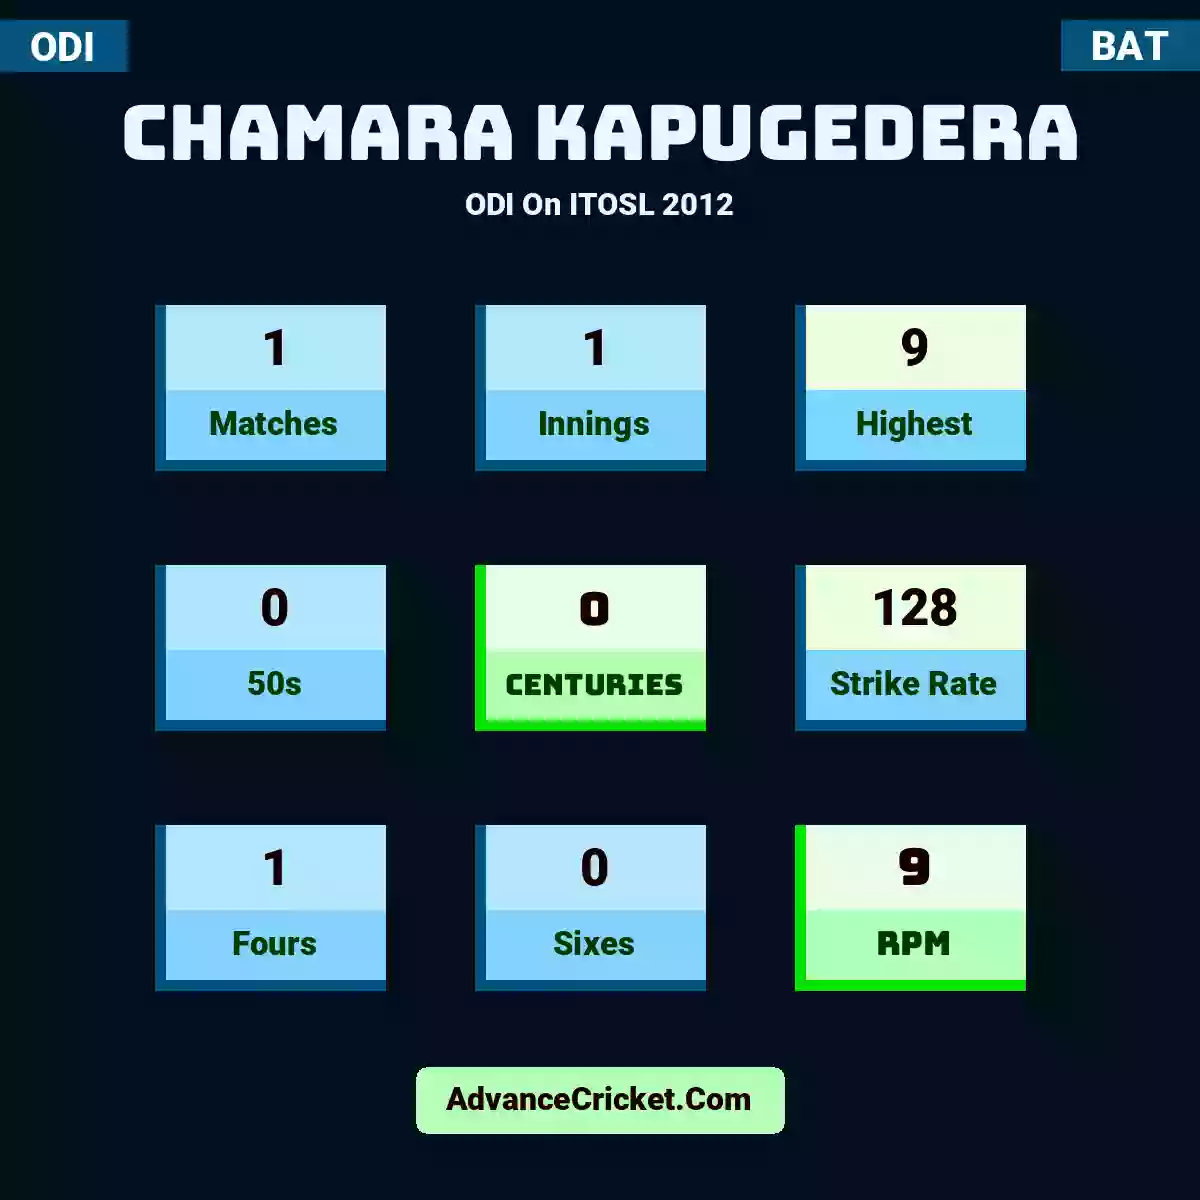 Chamara Kapugedera ODI  On ITOSL 2012, Chamara Kapugedera played 1 matches, scored 9 runs as highest, 0 half-centuries, and 0 centuries, with a strike rate of 128. C.Kapugedera hit 1 fours and 0 sixes, with an RPM of 9.